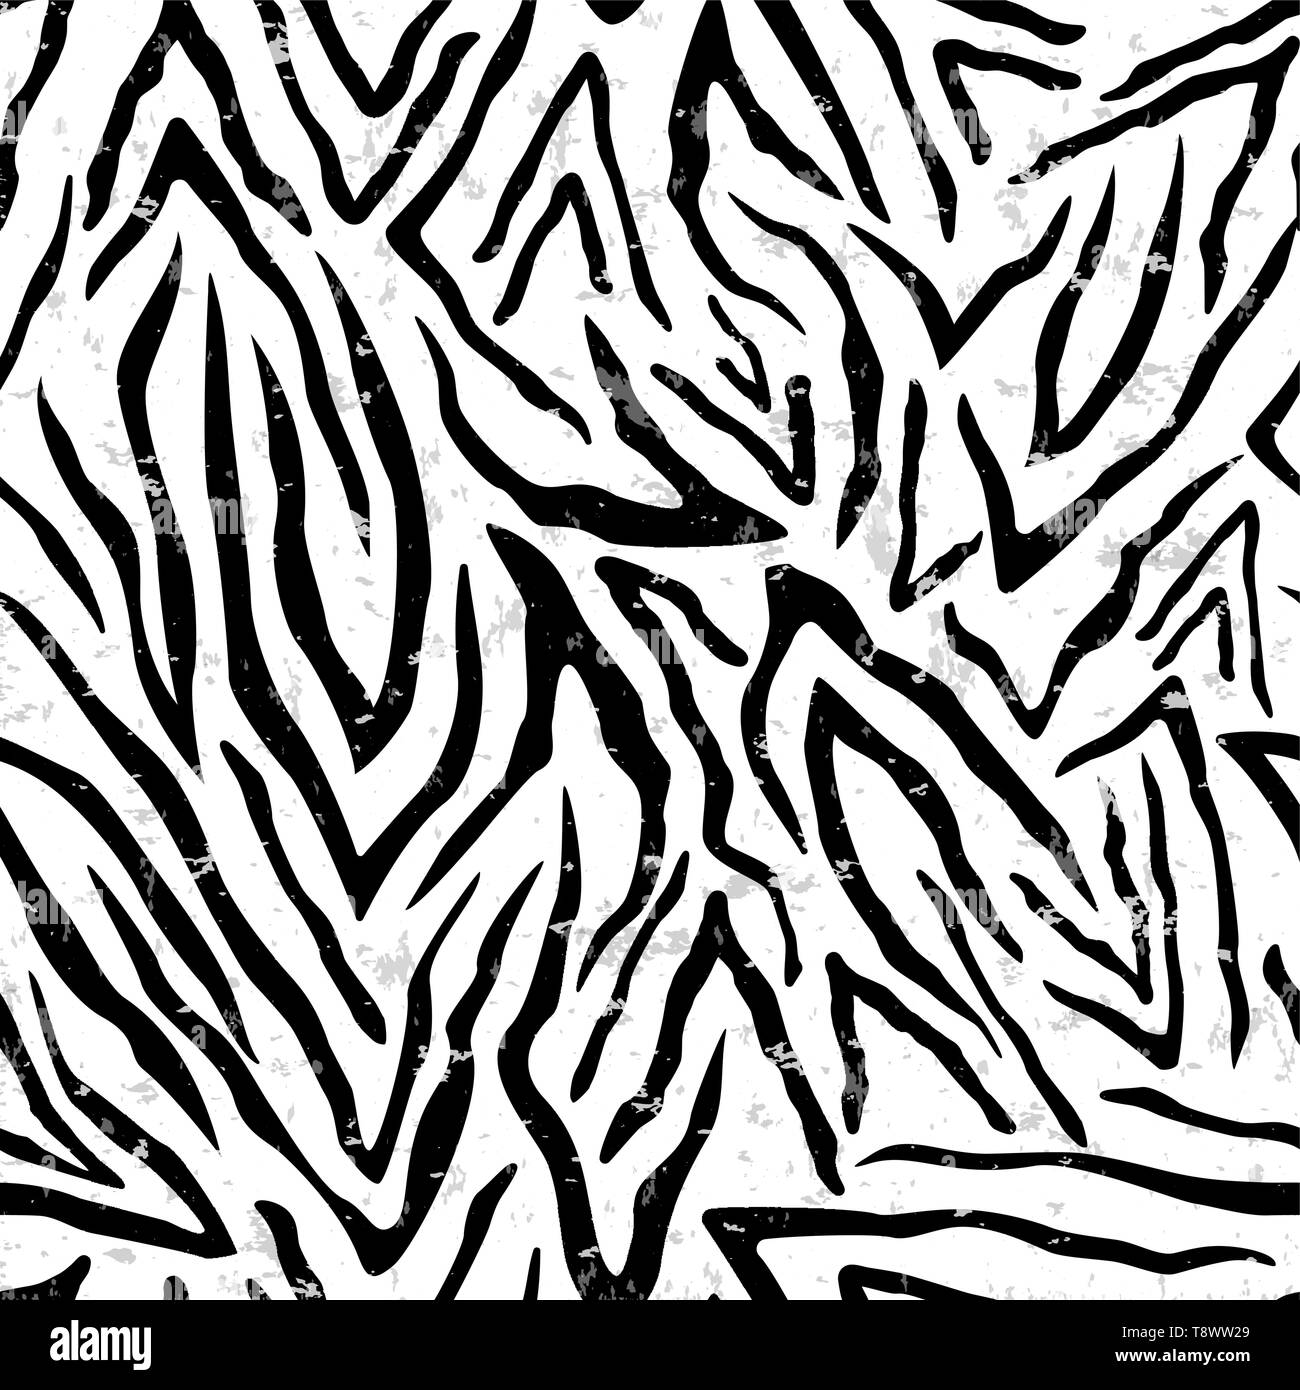 Zebra print seamless pattern. Wild animal skin background with grunge texture. Stock Vector